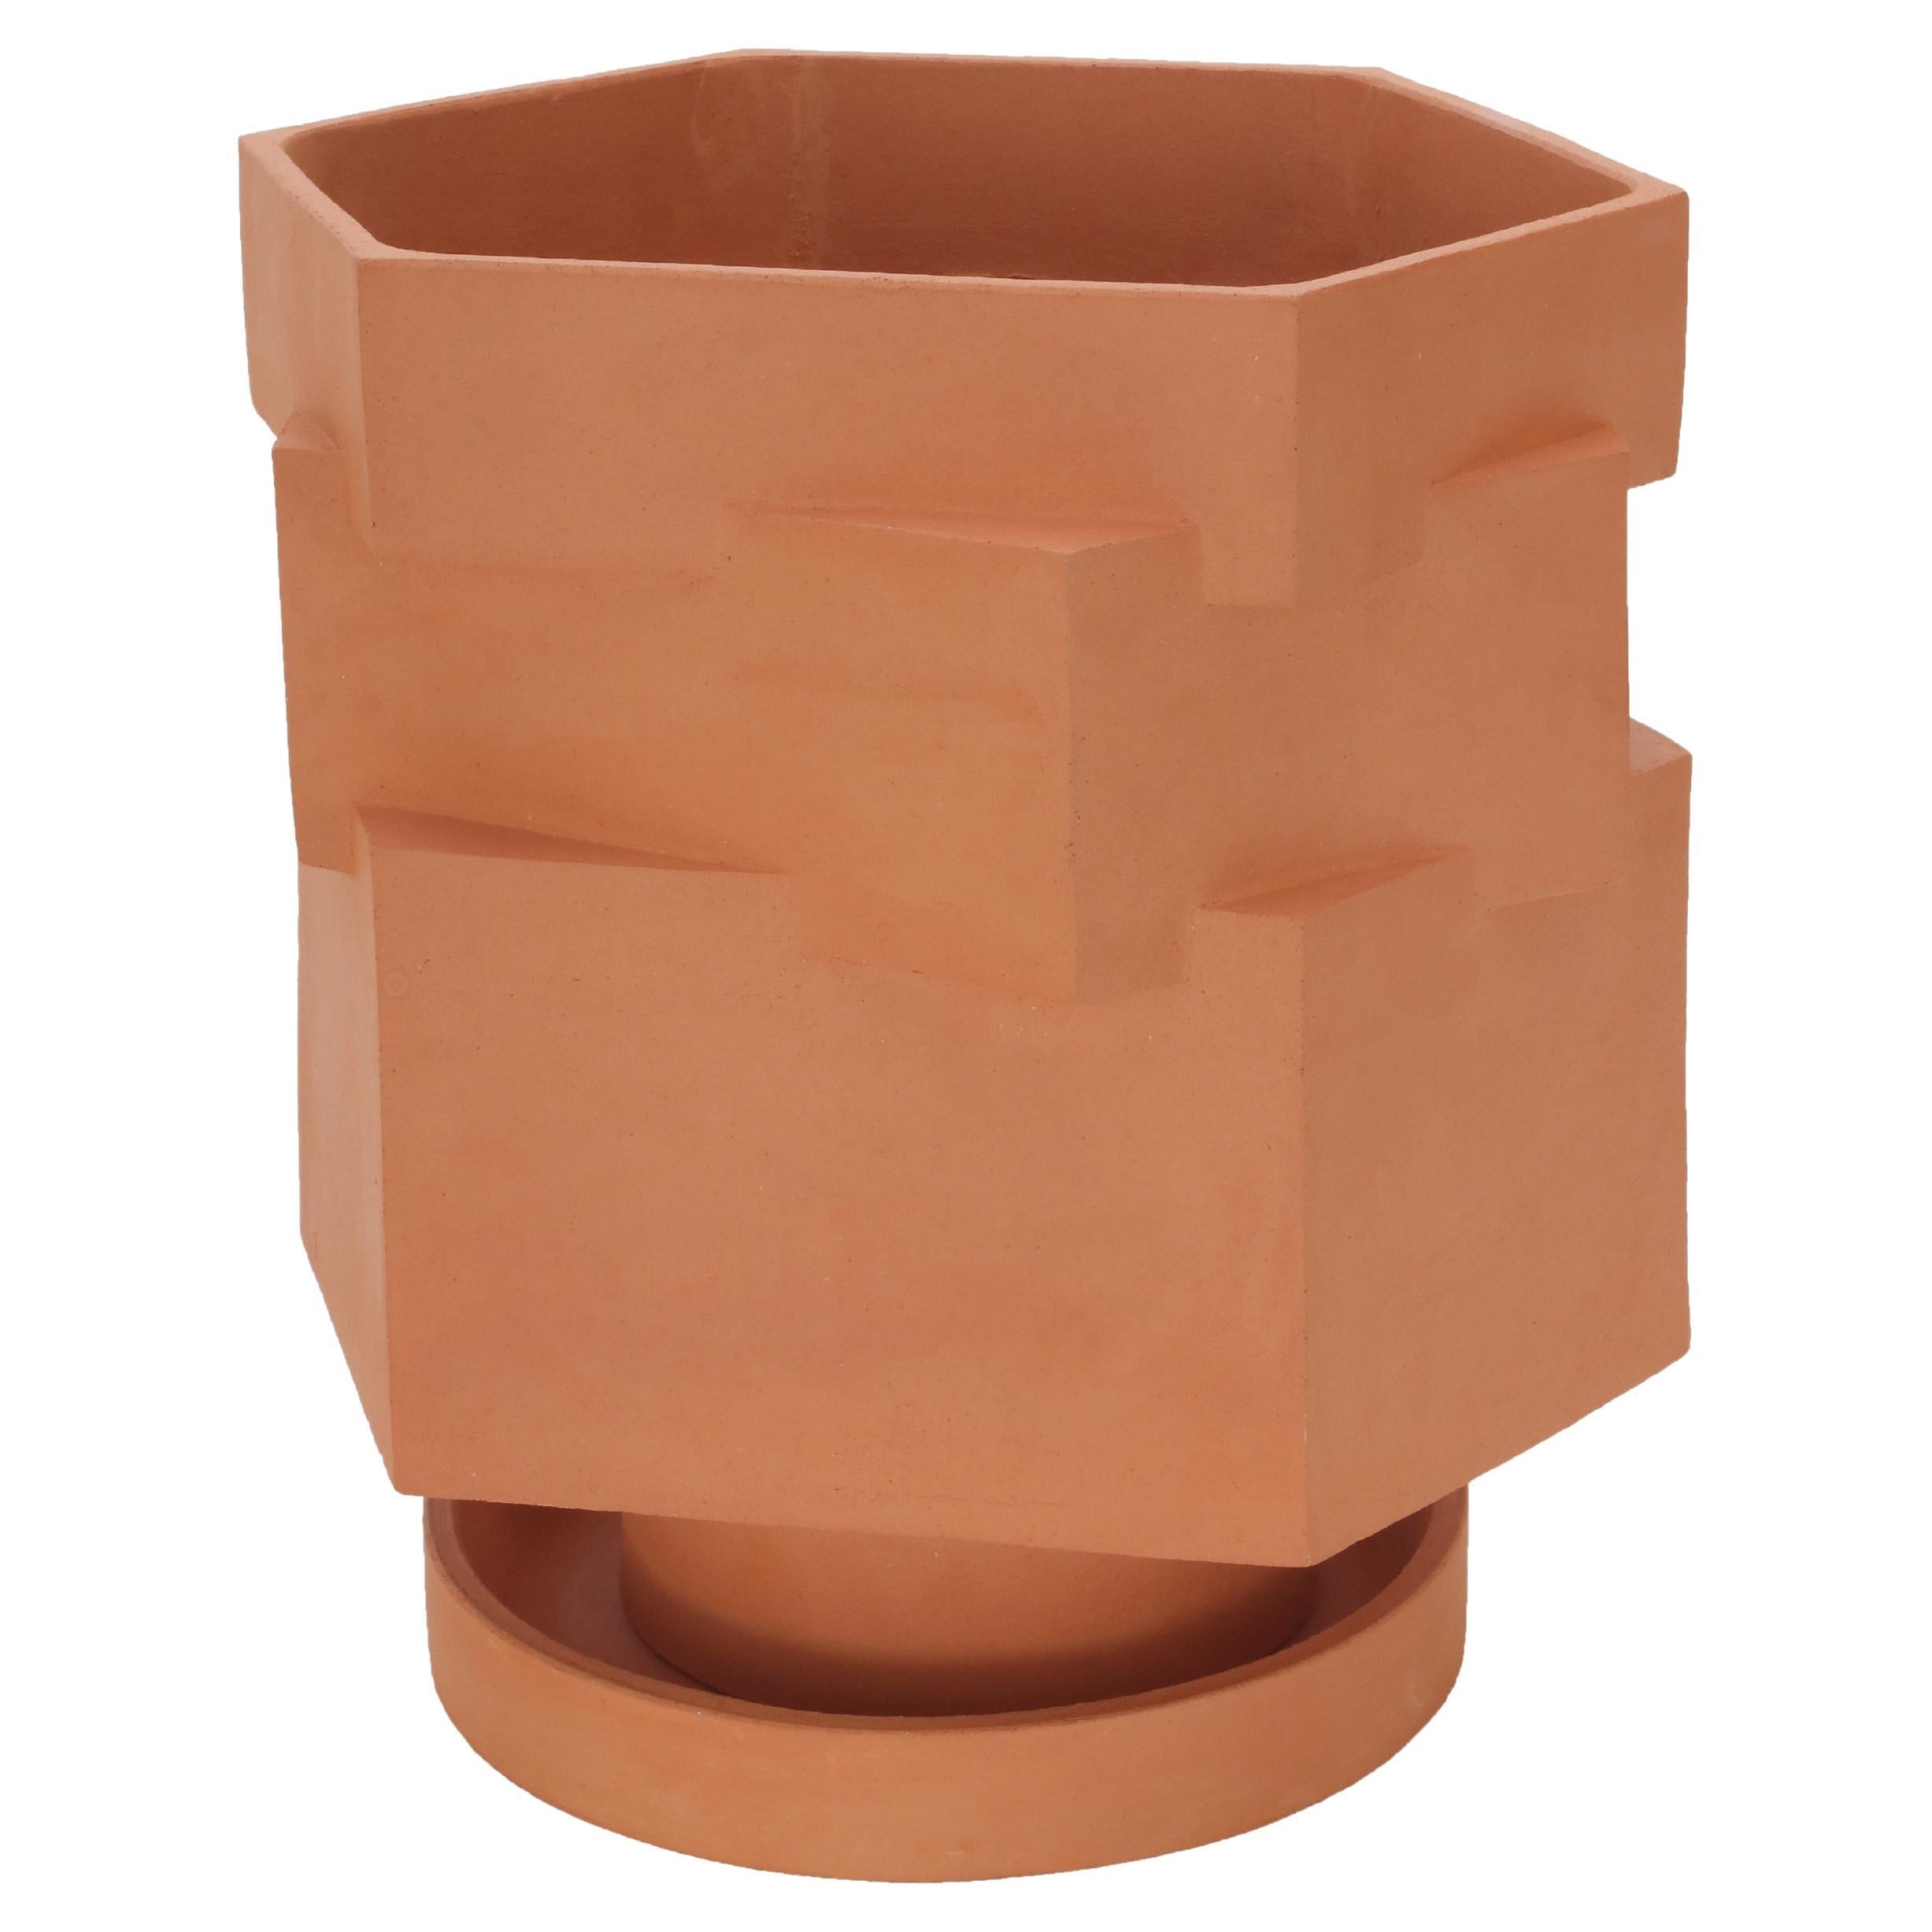 Ceramic Hex Planter in Raw Terracotta by BZIPPY